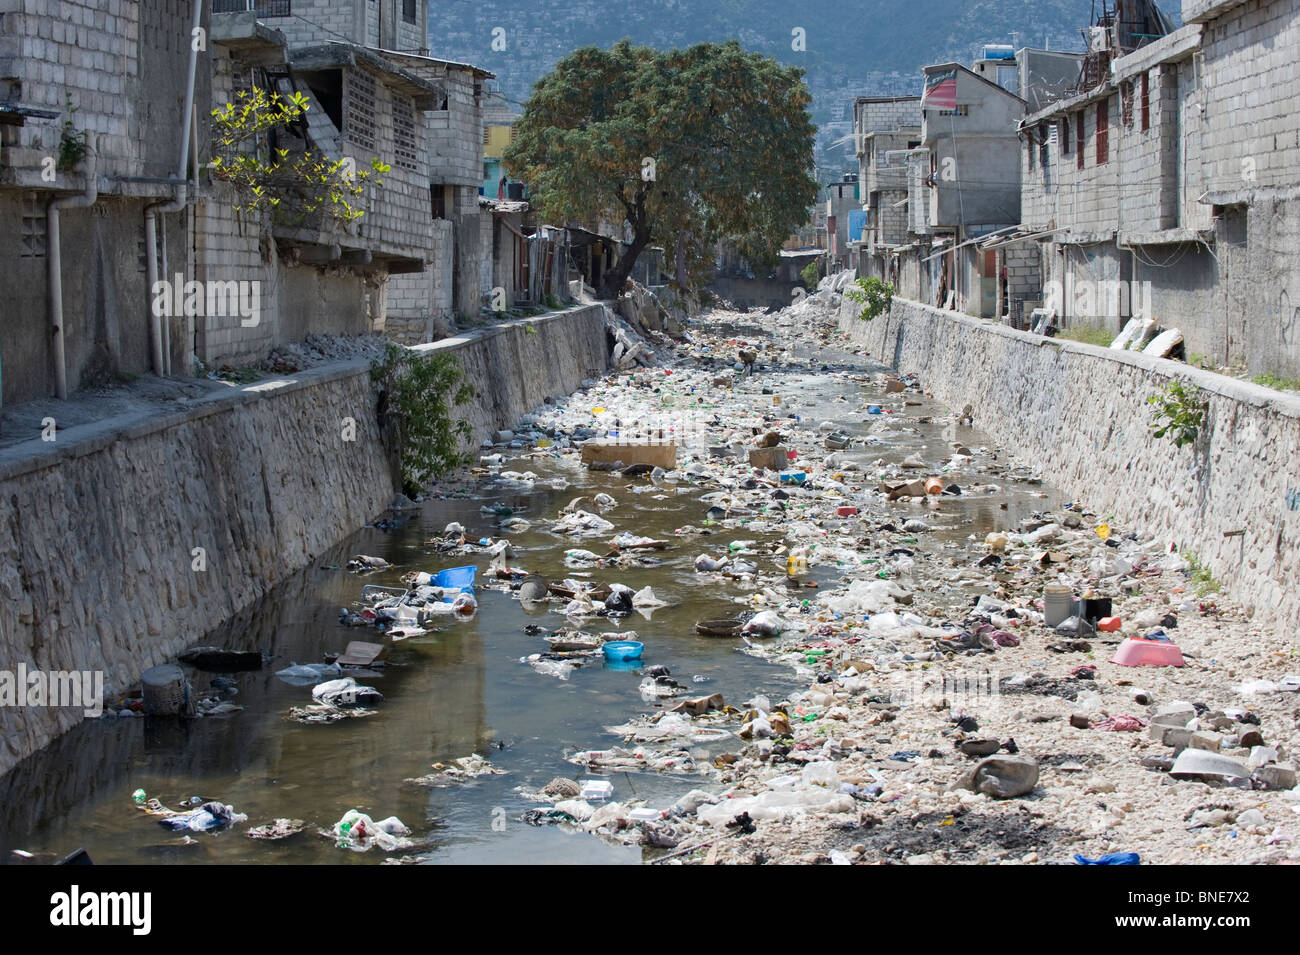 Garbage filled river, Port au Prince, Haiti, Caribbean Stock Photo